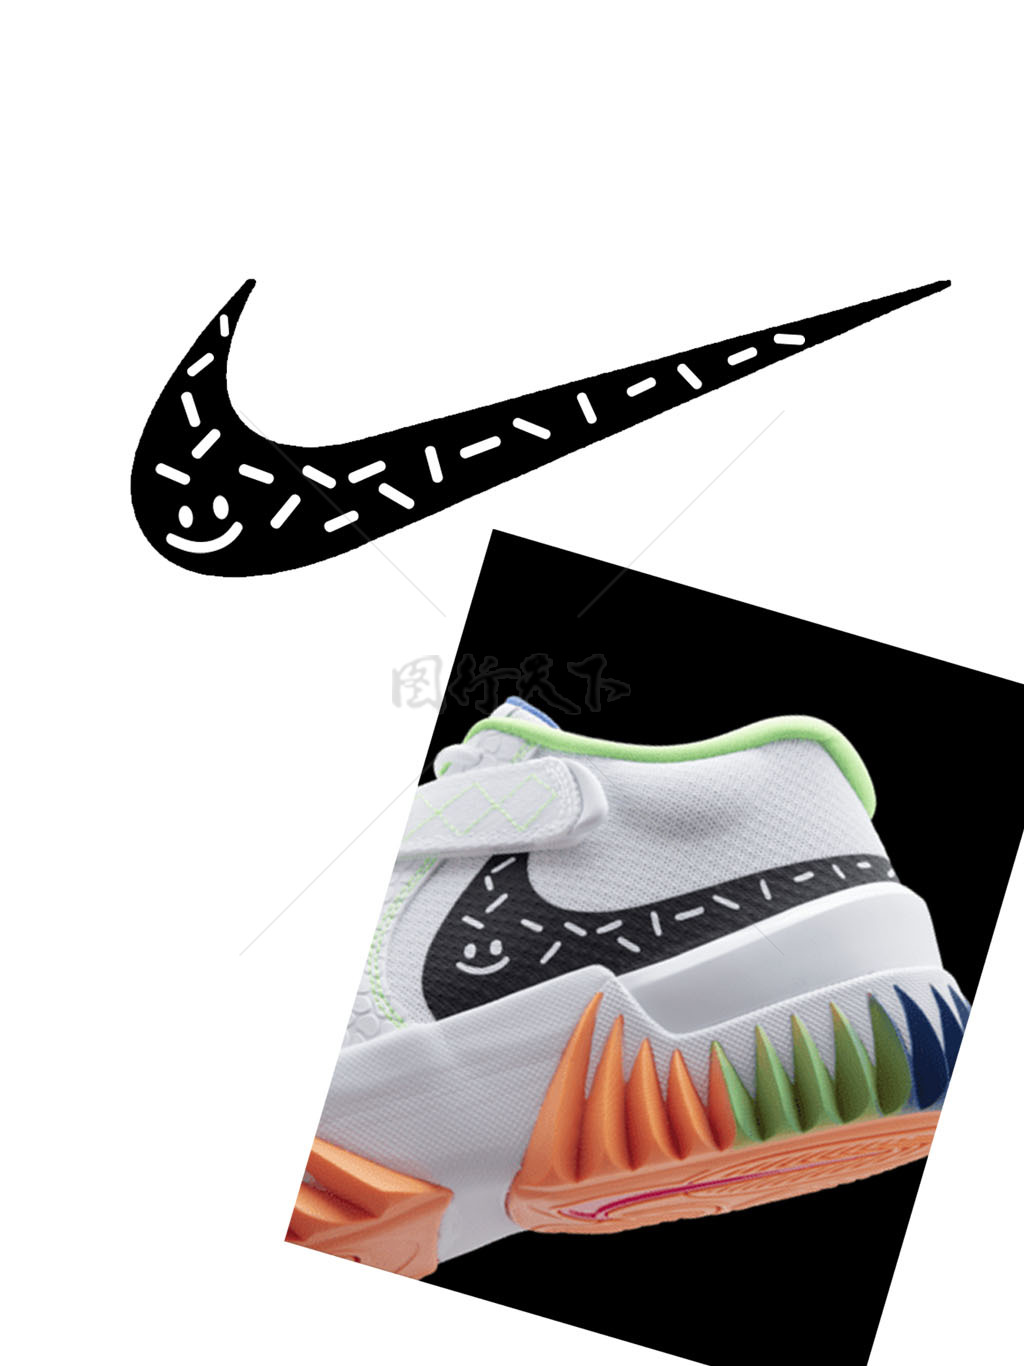 Nike logo 鞋子 笑脸 勾